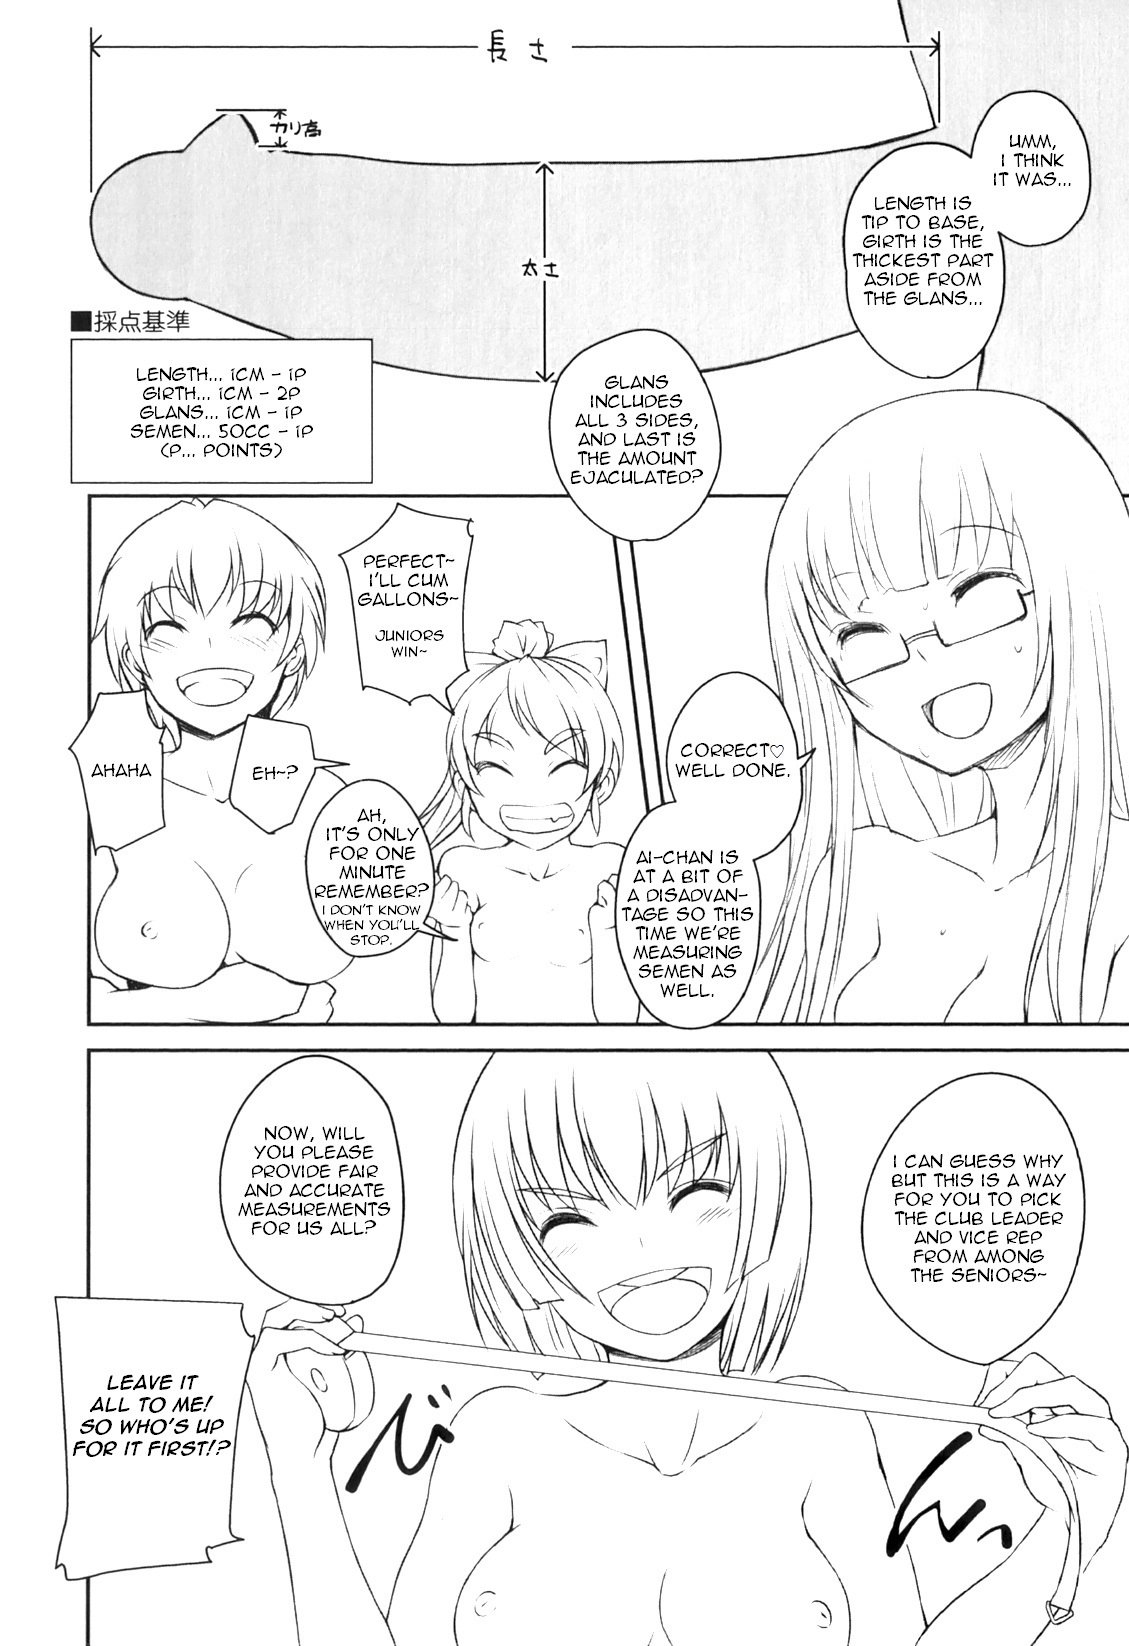 Futabu! Karada Sokutei! | Futa Club! Body Measurements! - Page 3 - HentaiFox